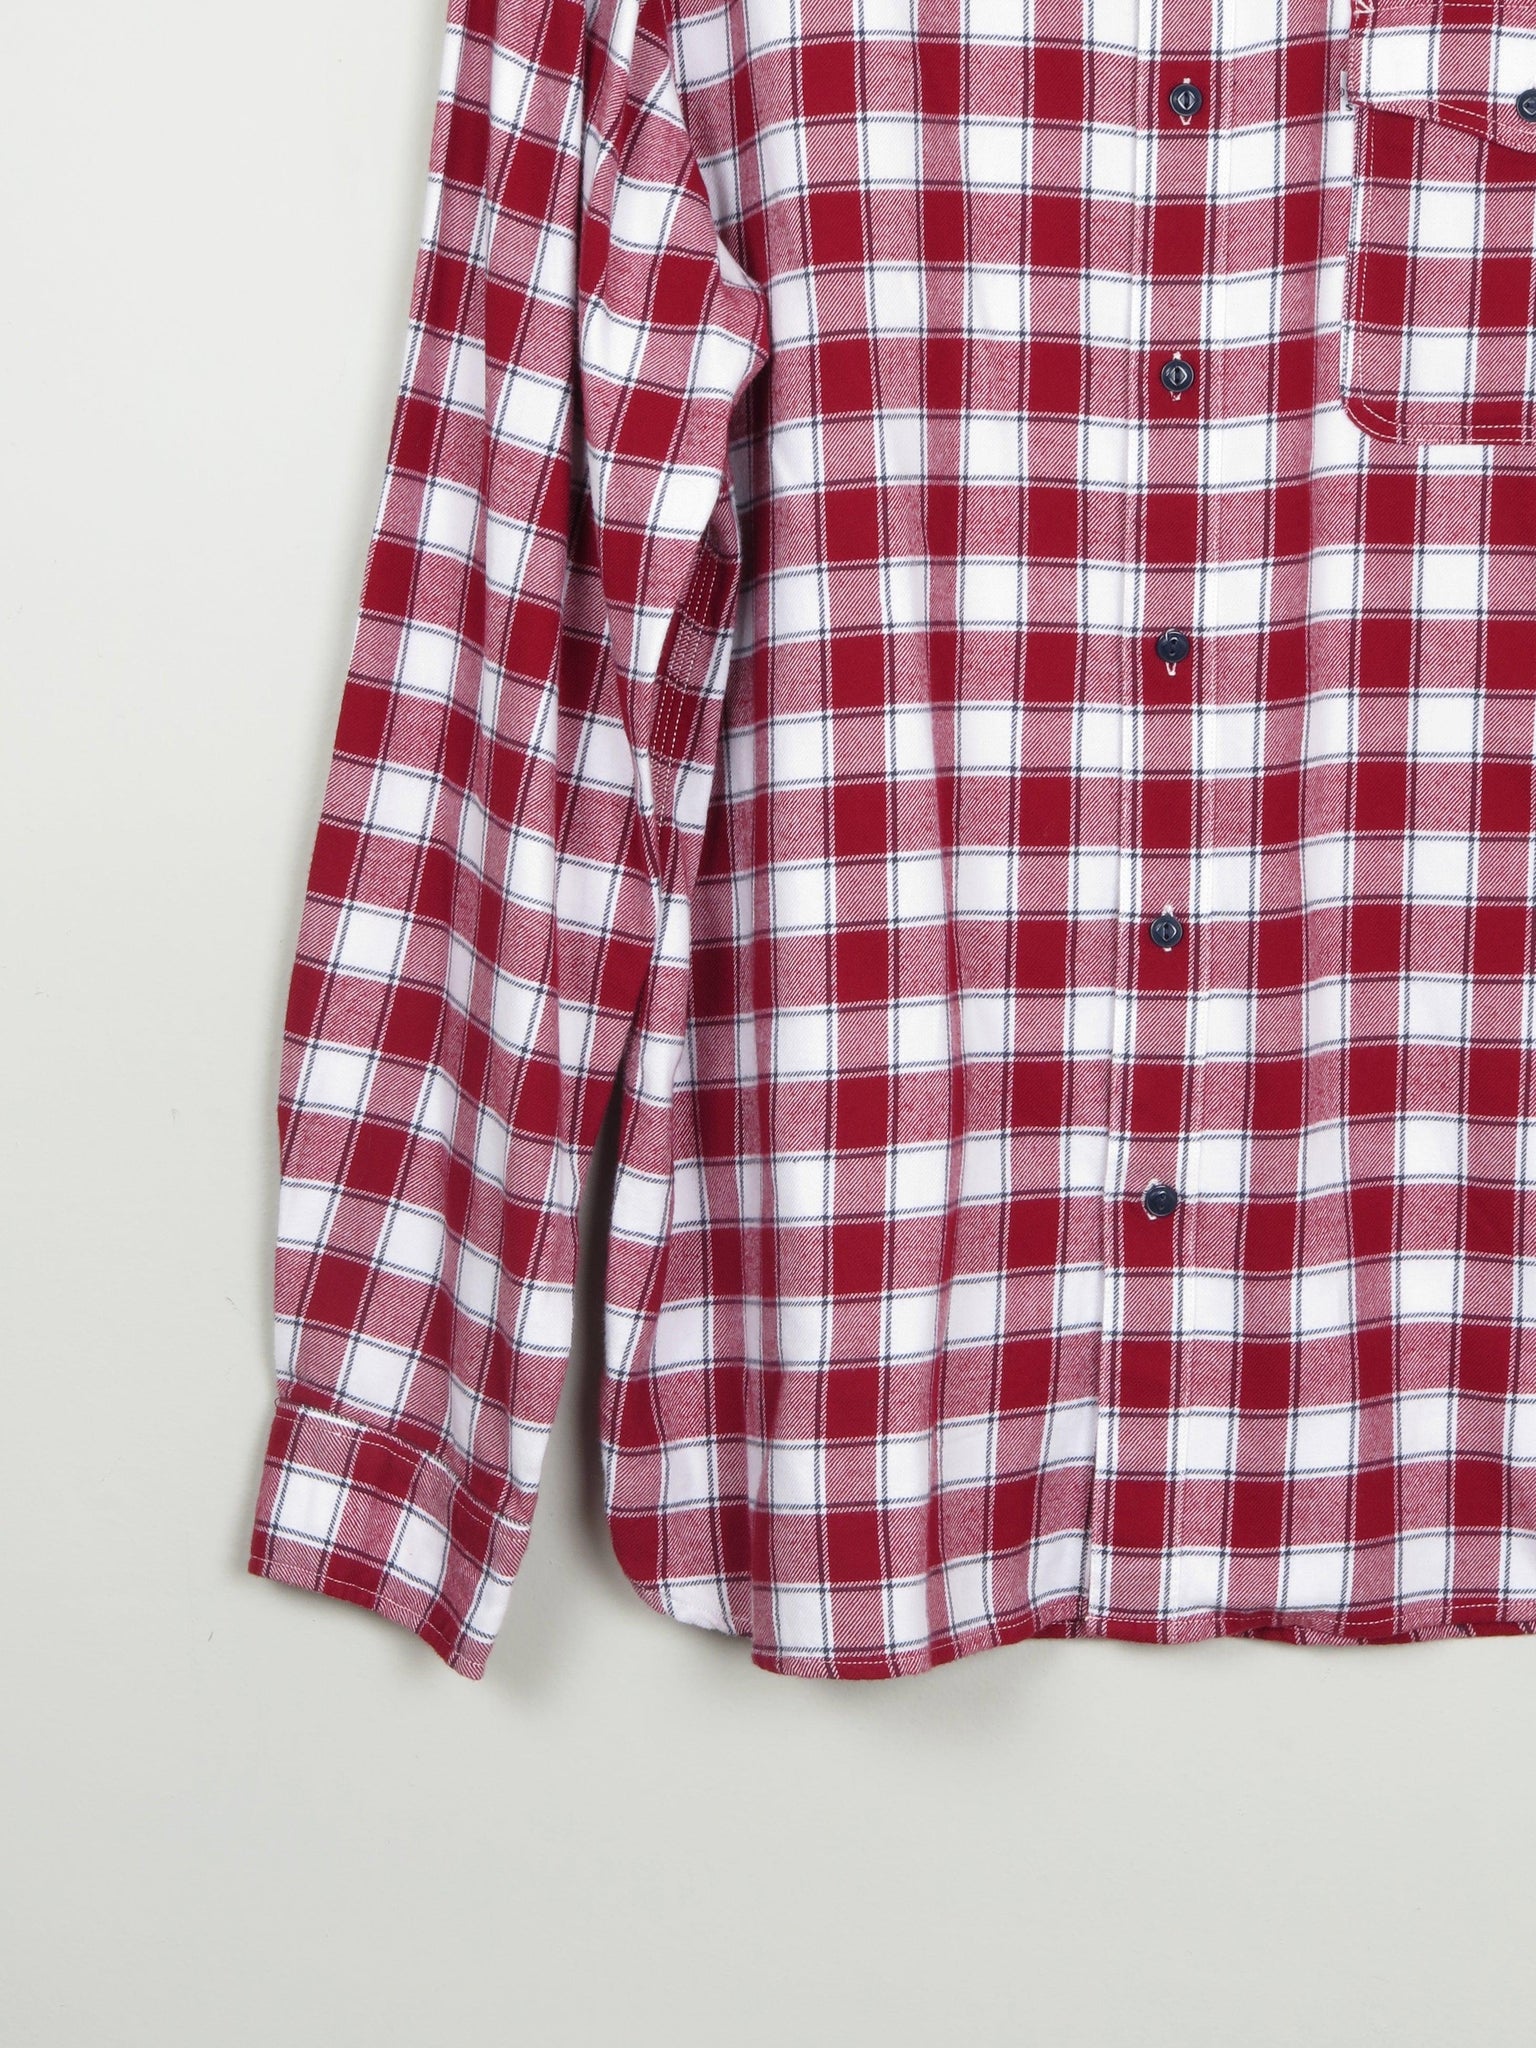 Men's Wine & White Check Levi's Flannel Shirt XL - The Harlequin